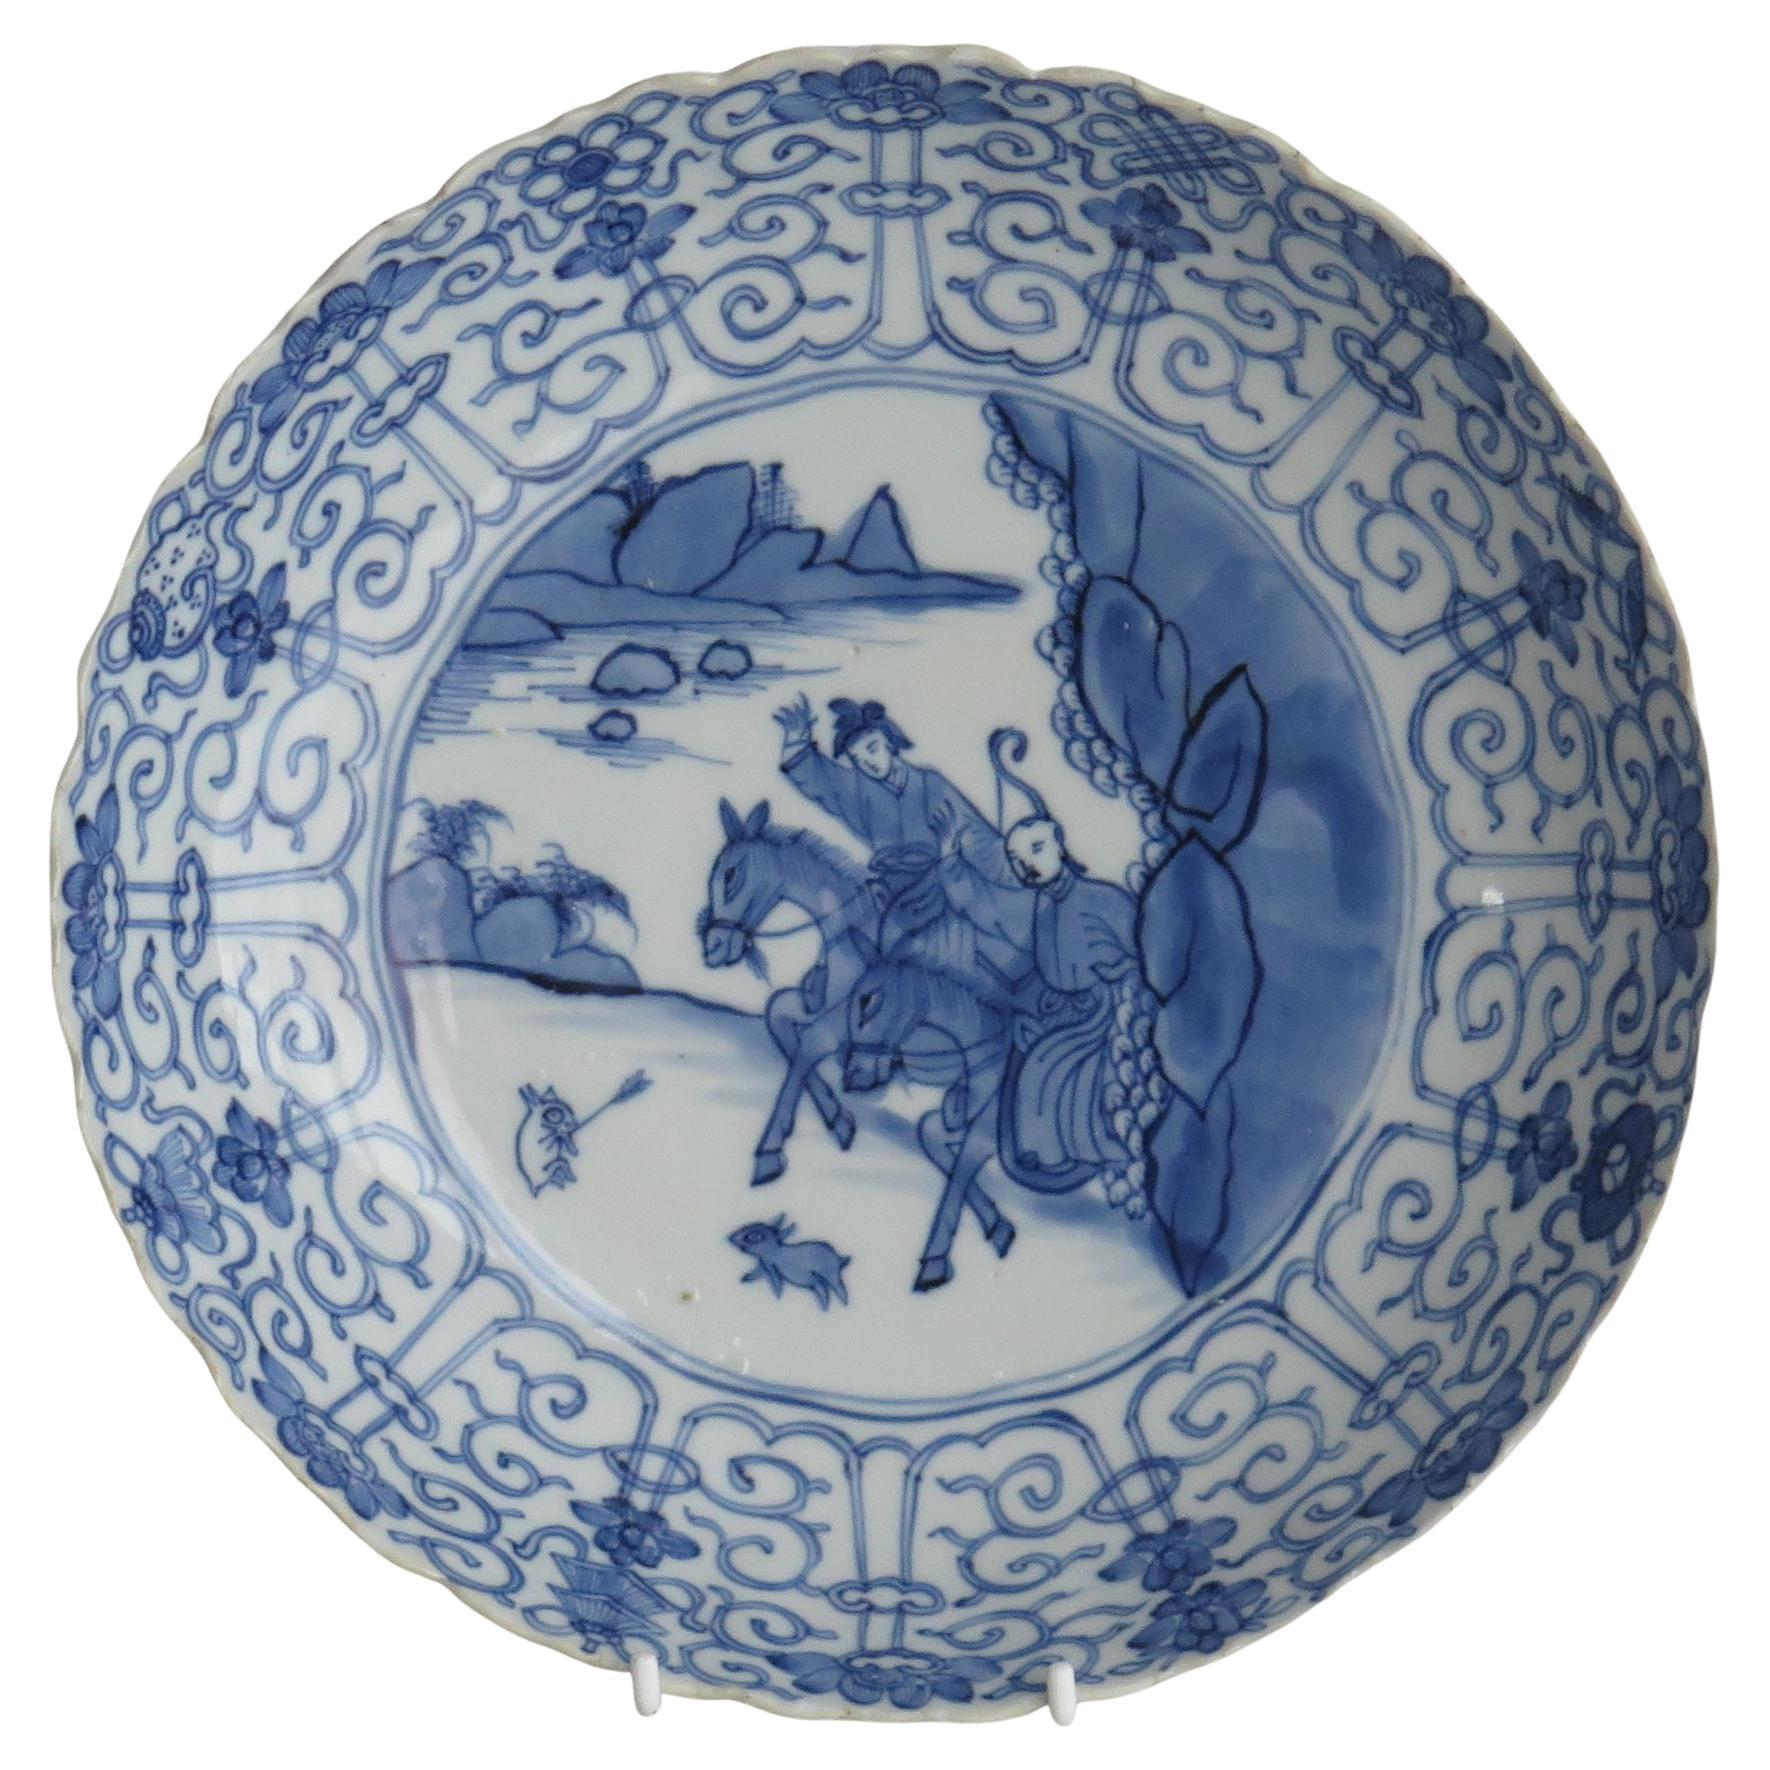 Kangxi Period Chinese Dish or Plate Porcelain Blue & White Chenghua Mark Ca 1680